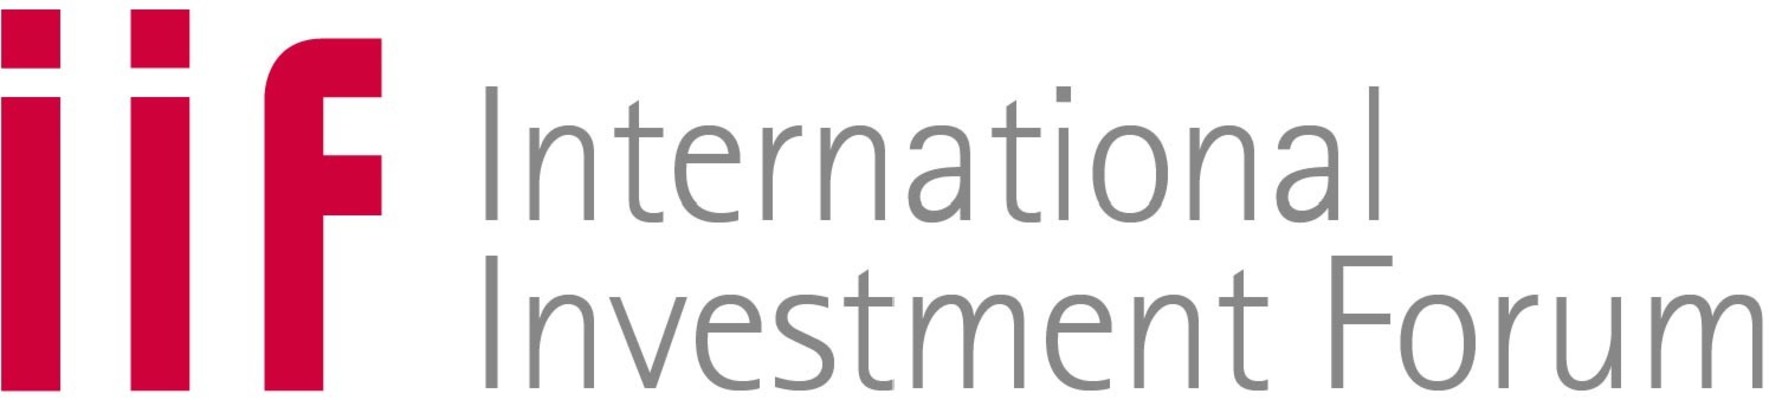 International Investment Forum (IIF) Logo